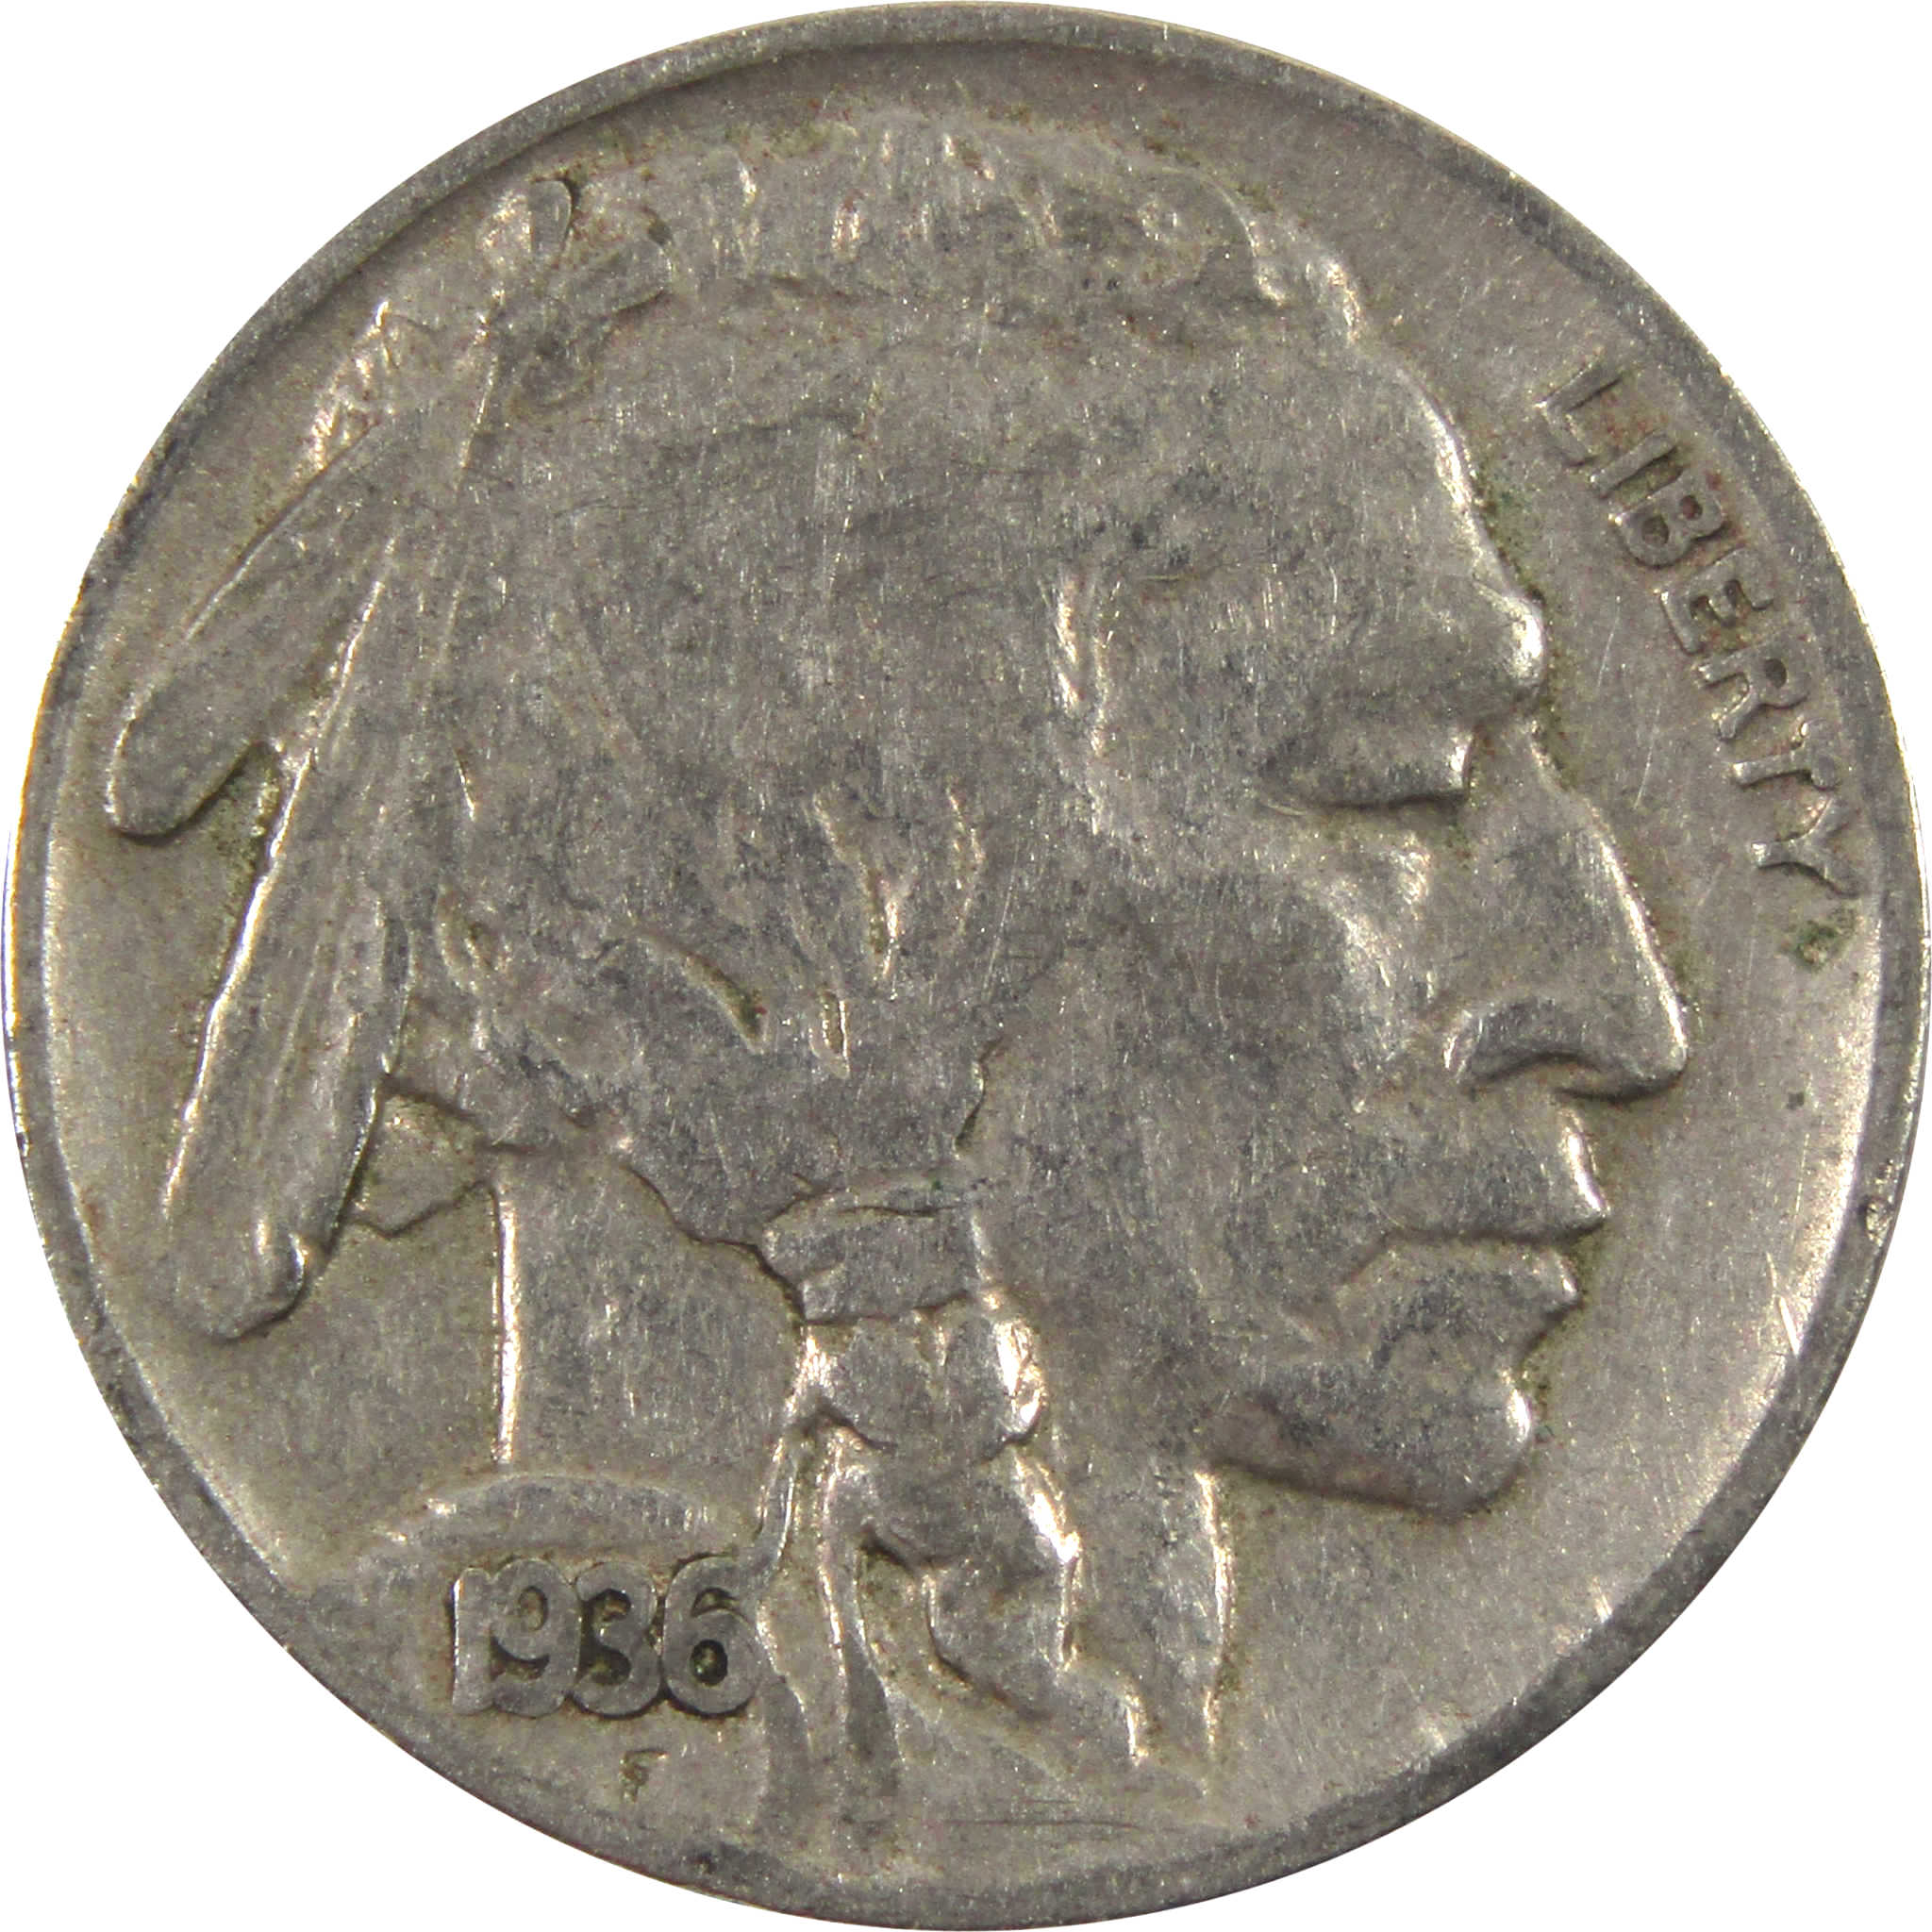 1936 Indian Head Buffalo Nickel F fine 5c Coin